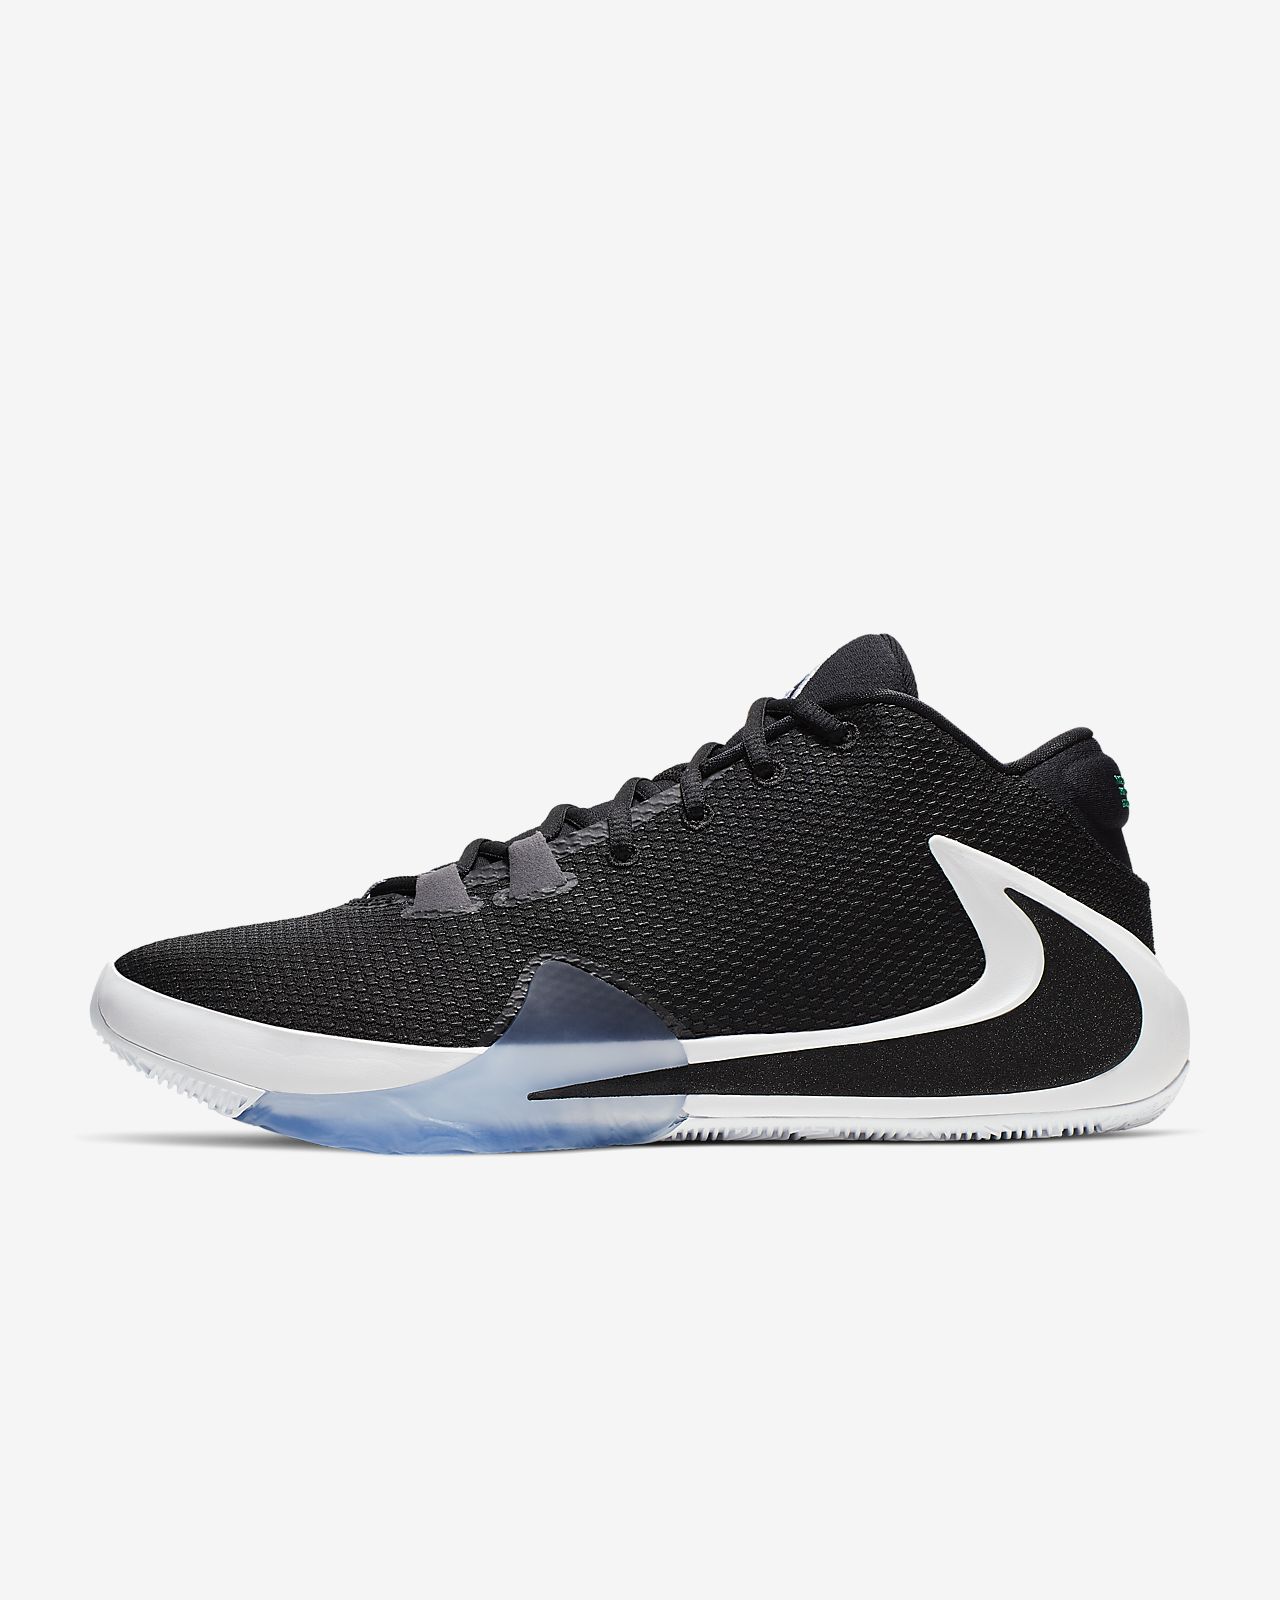 Zoom Freak 1 Basketball Shoe. Nike RO1280 x 1600